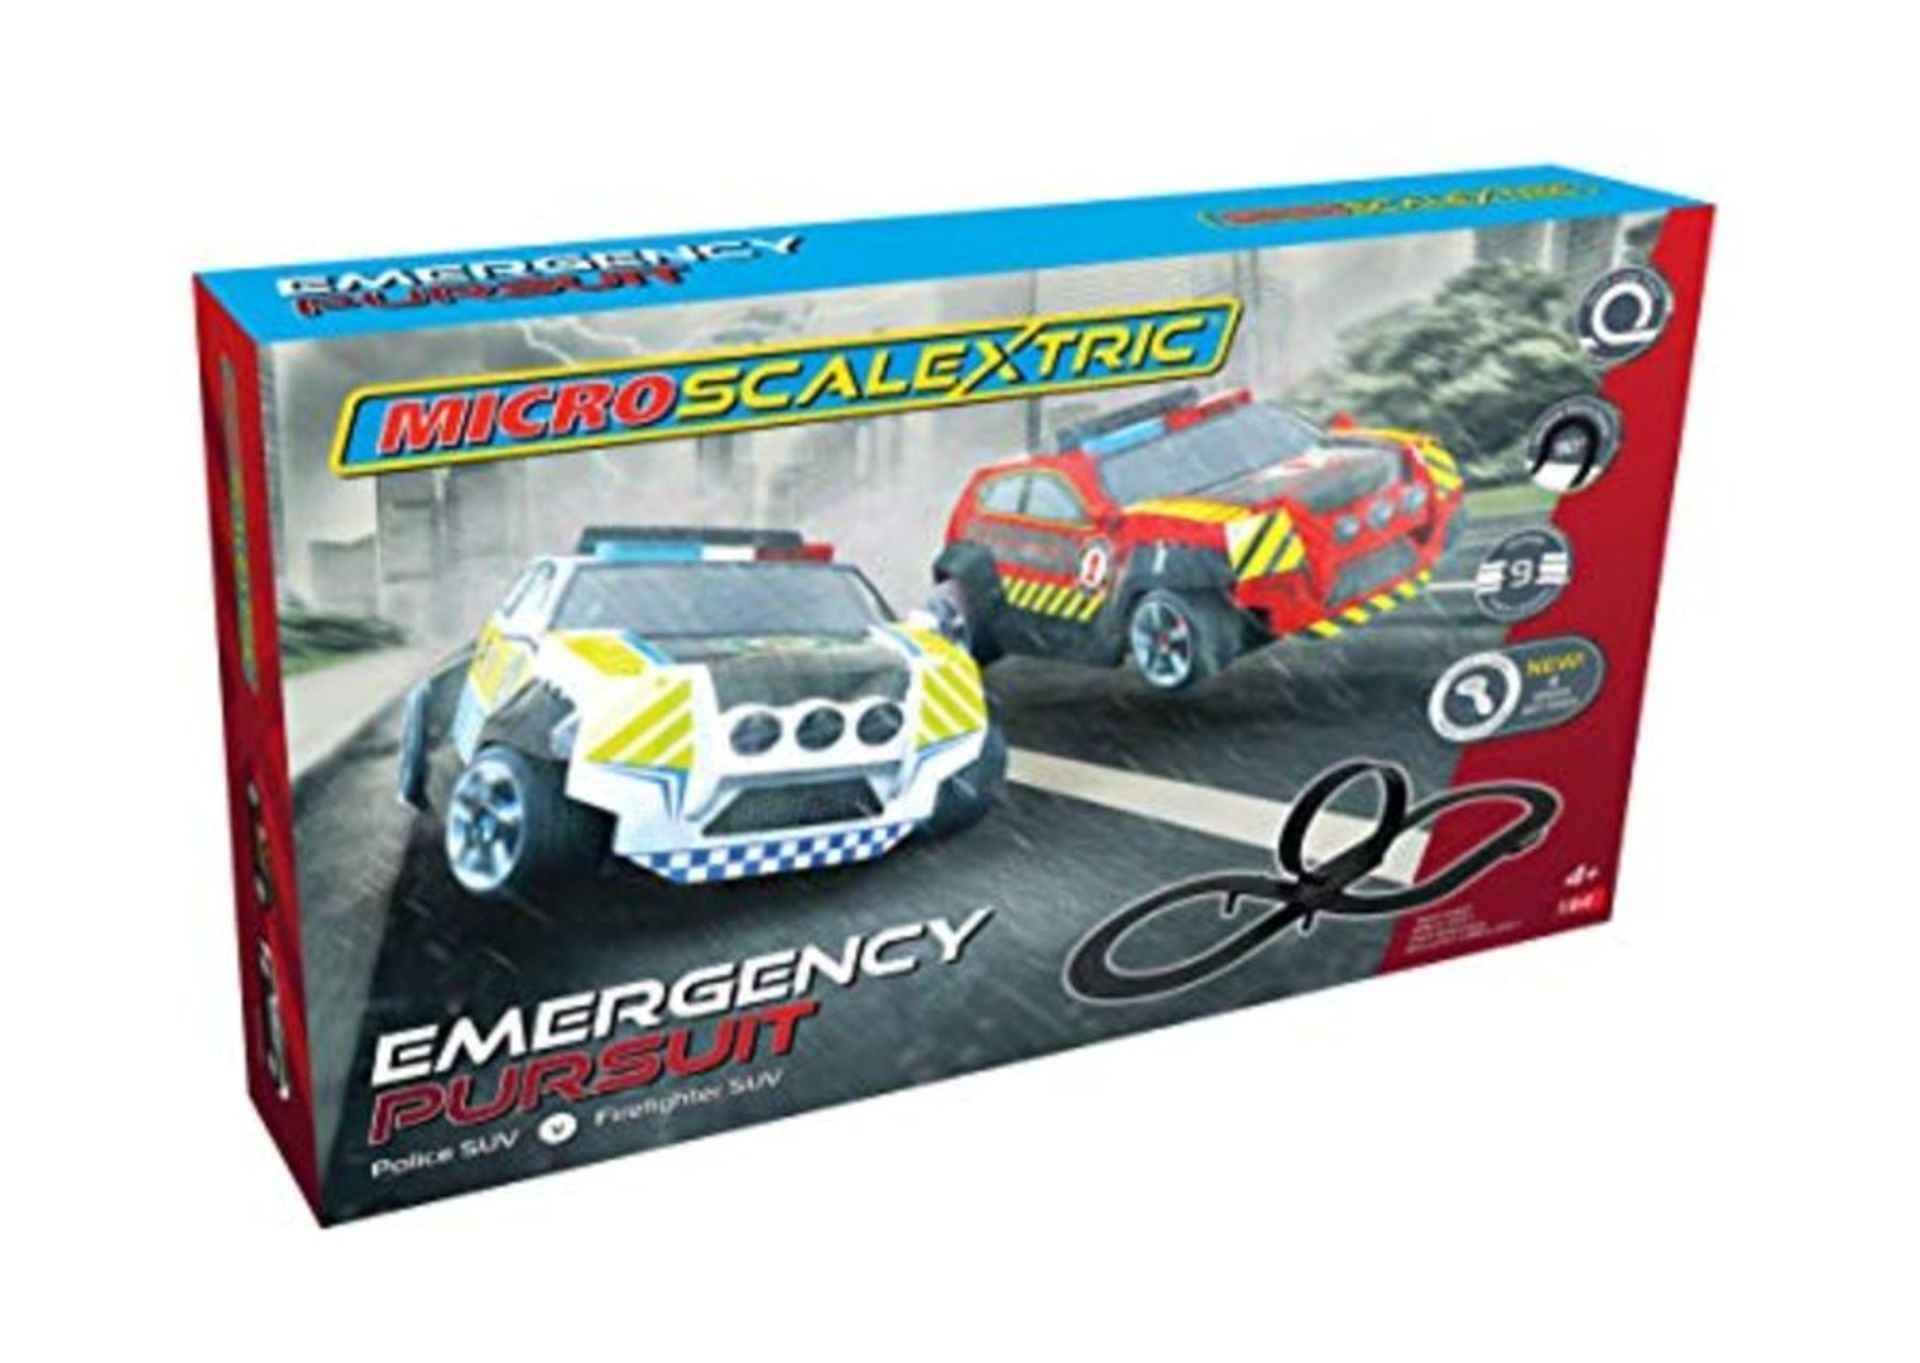 Micro Scalextric G1132 Emergency Pursuit Slot Car Racing, Black